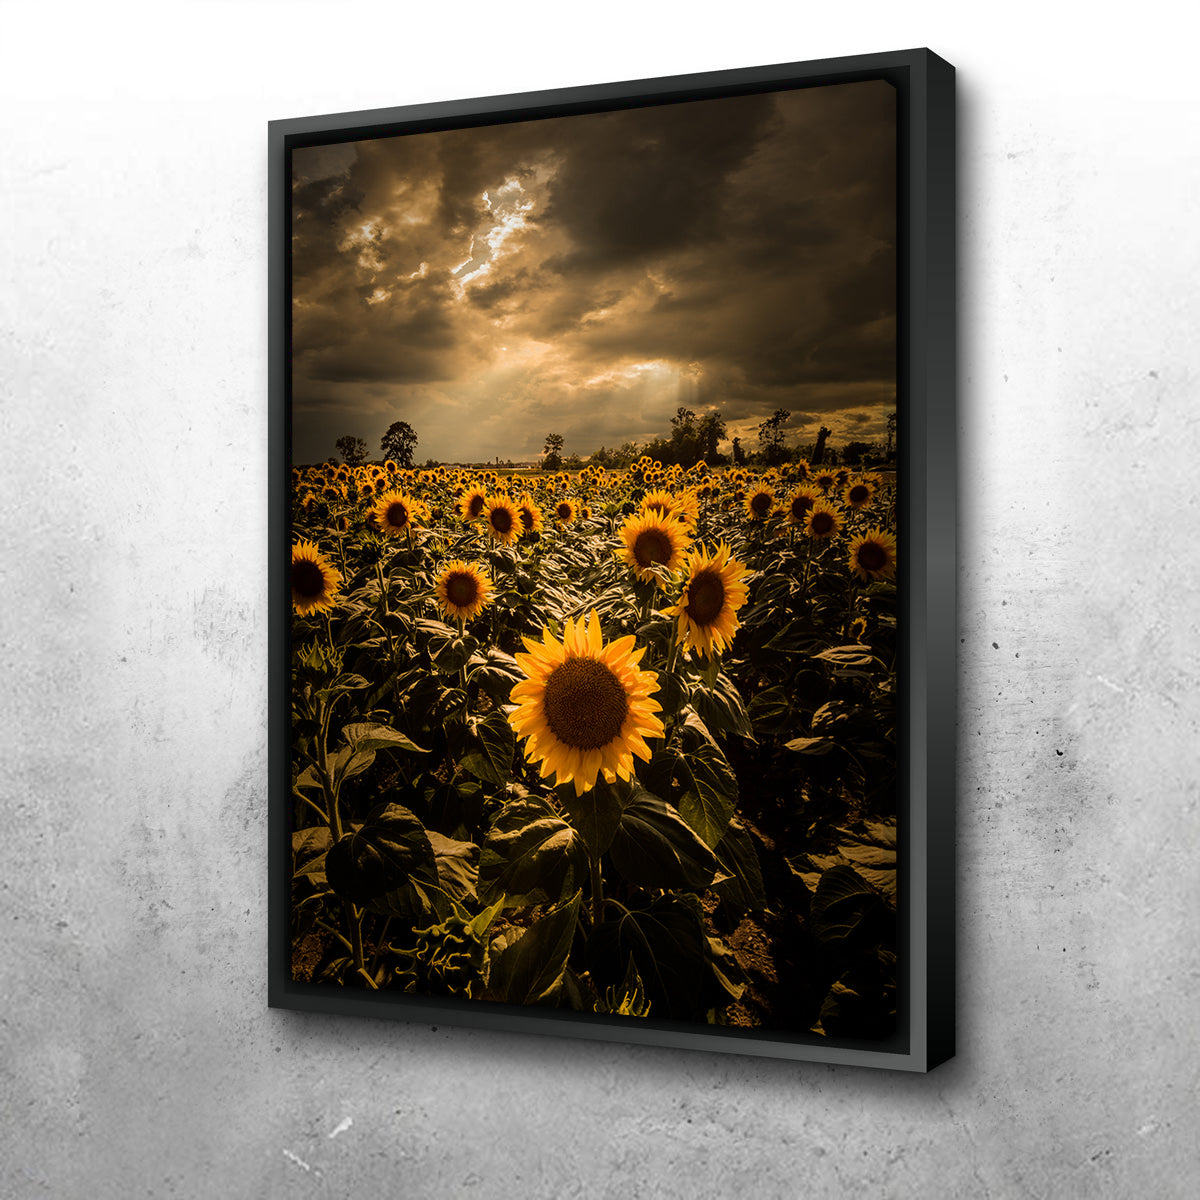 Overcast Sunflowers